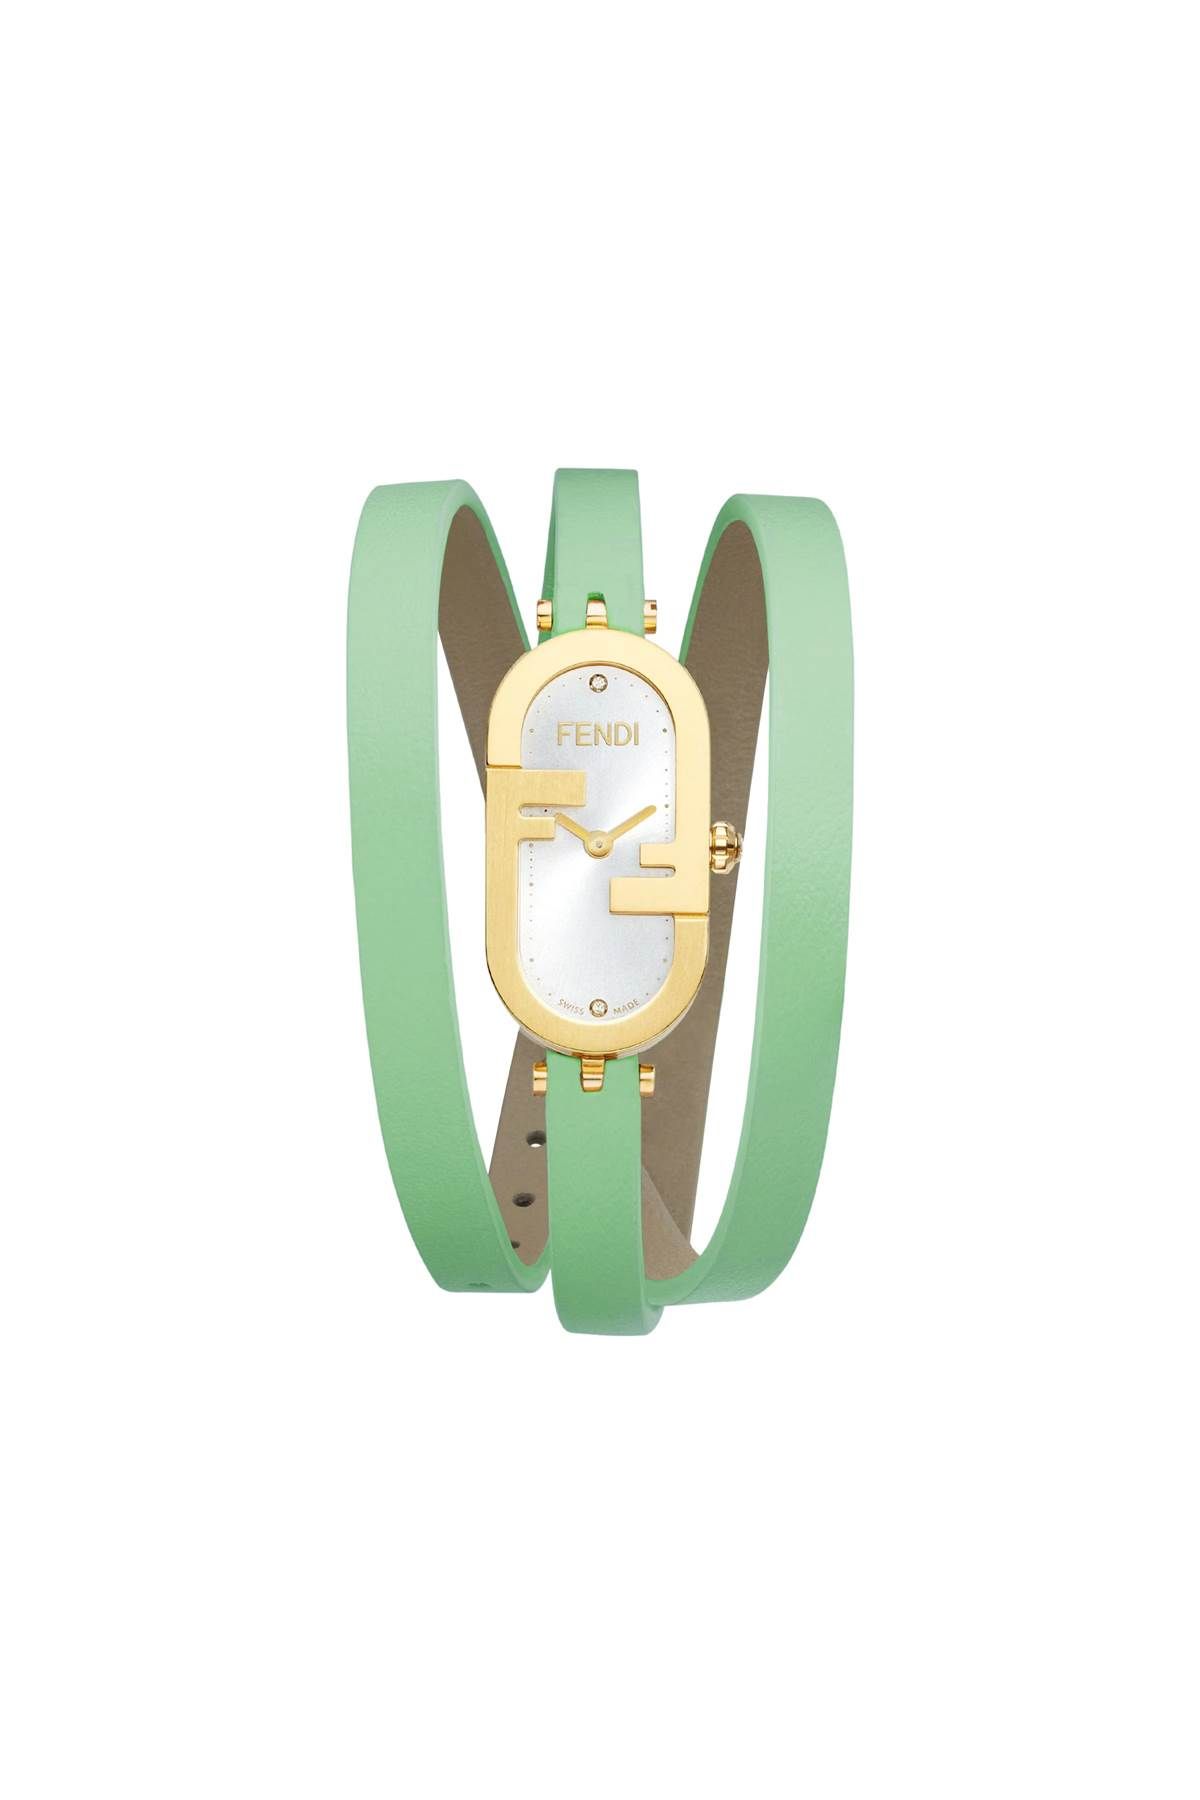 Fendi O'lock Vertical Watch In Green